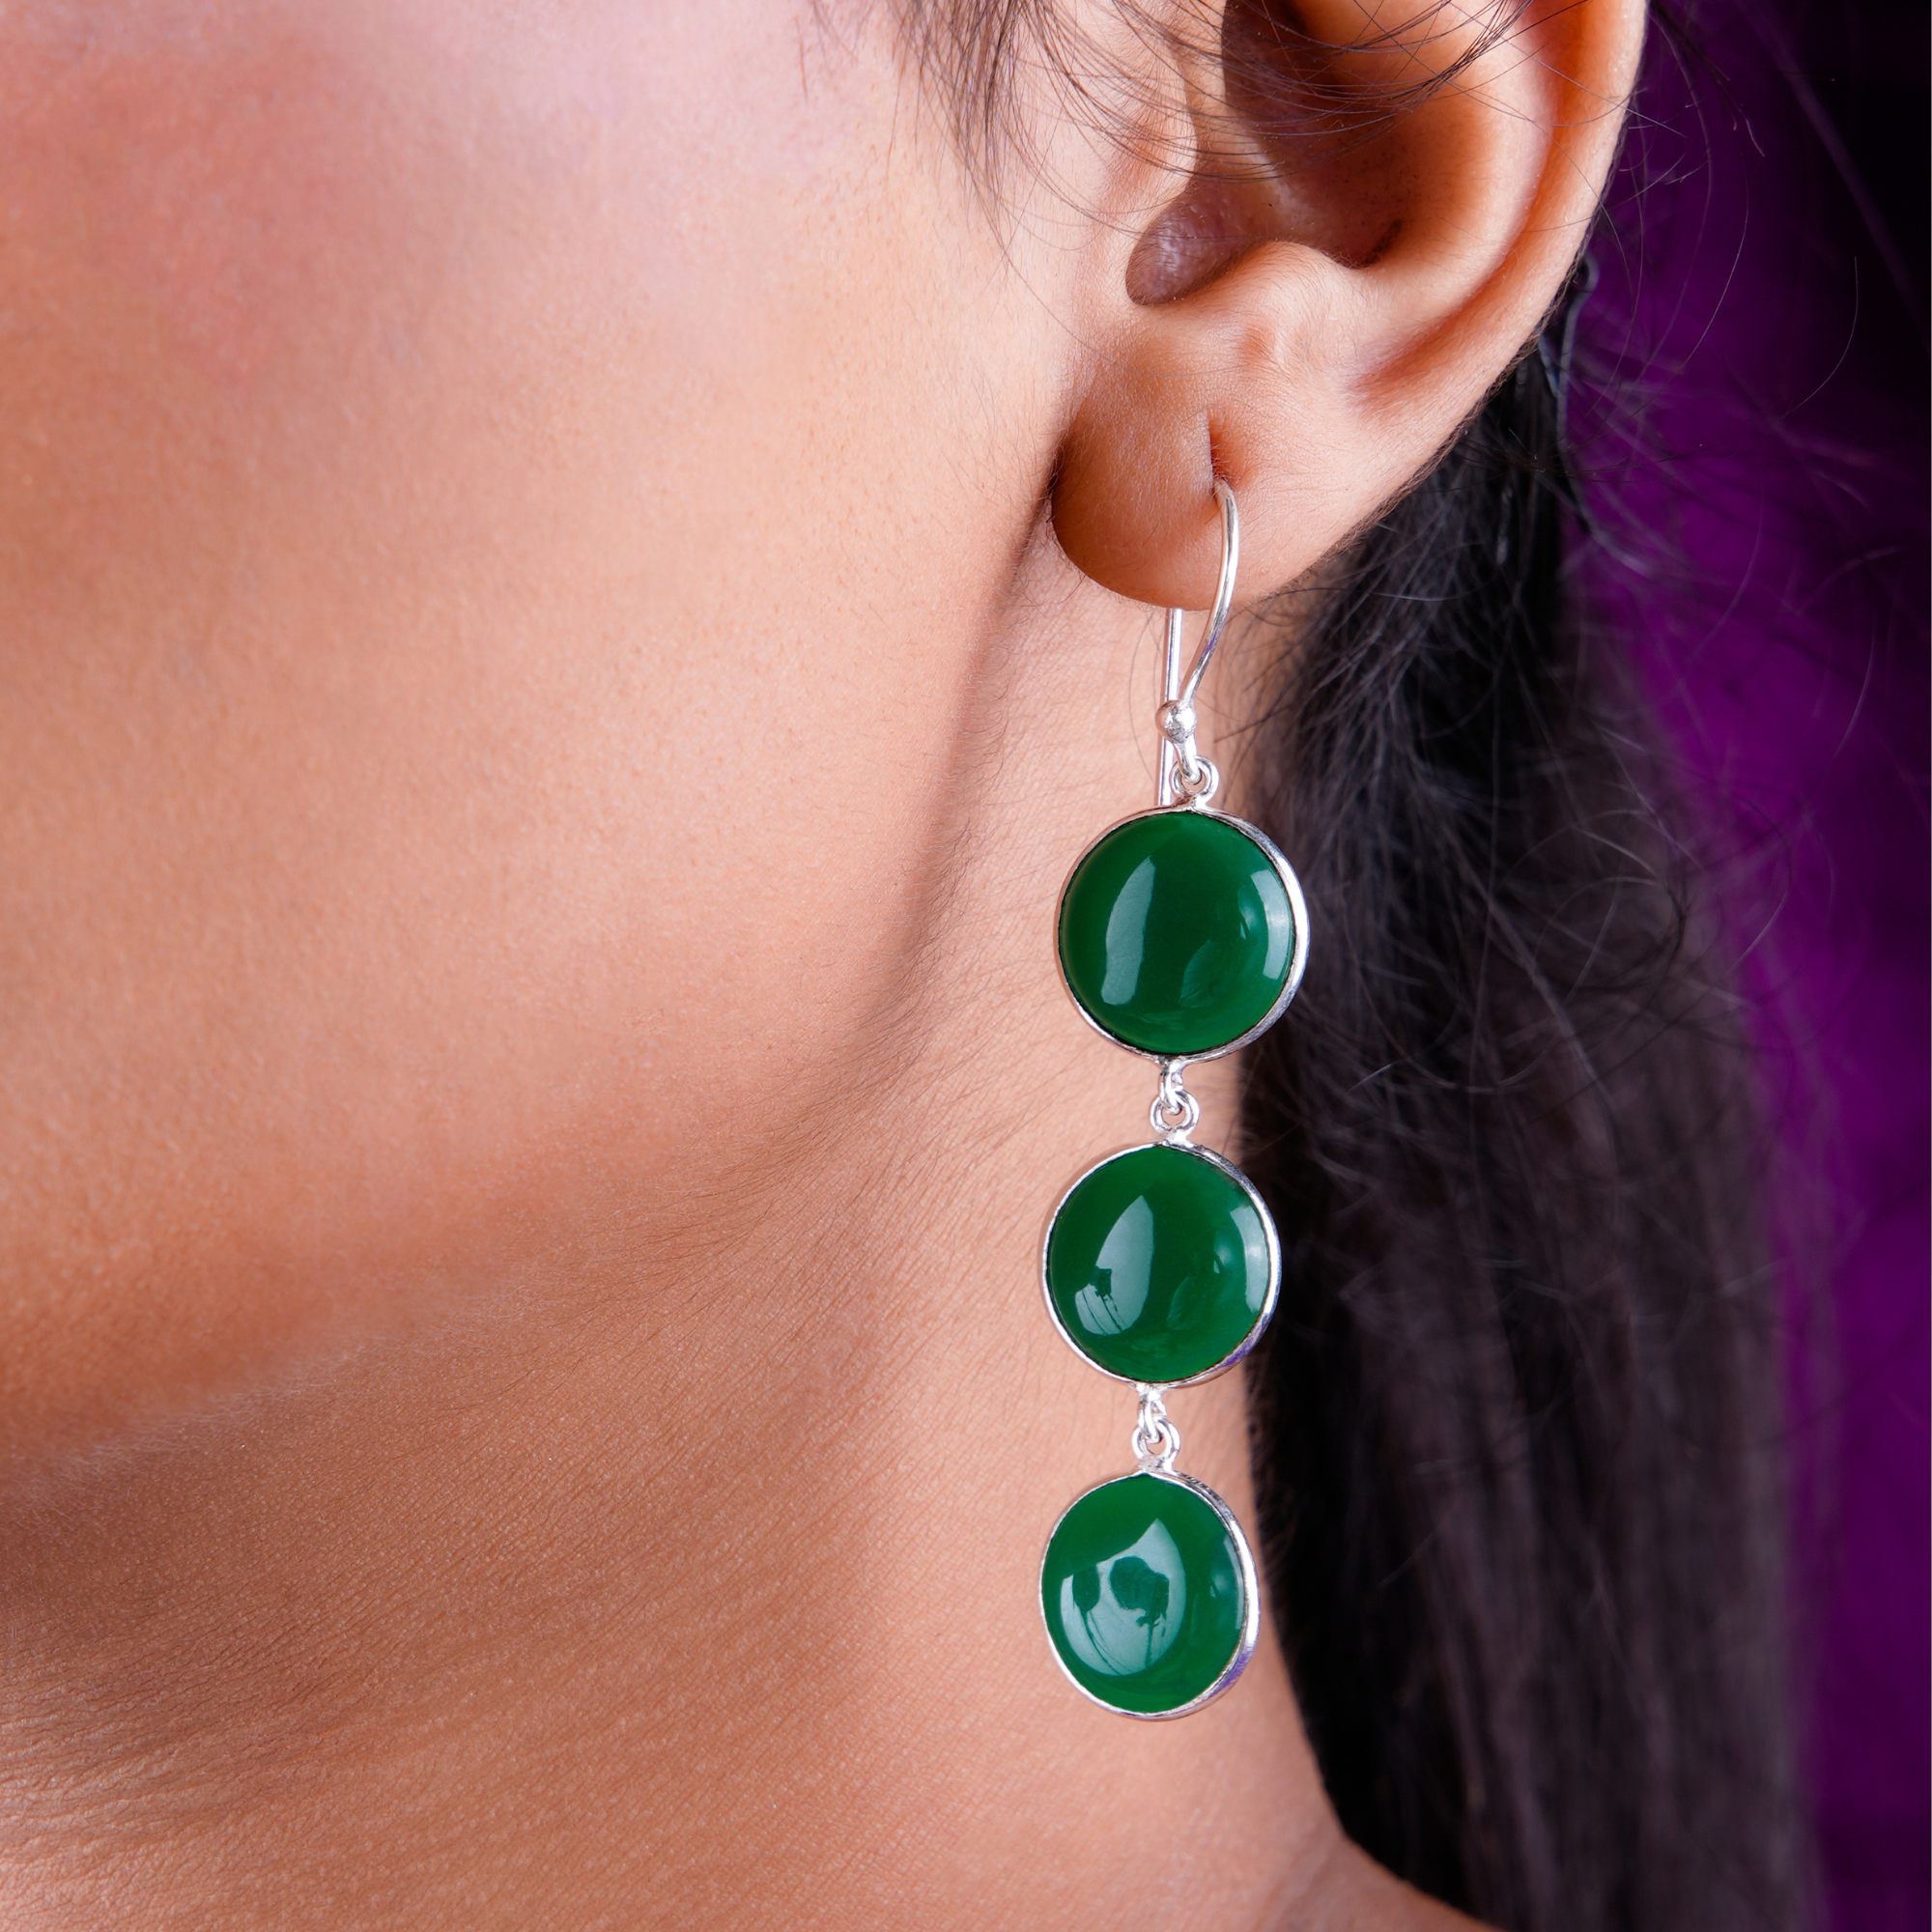 Vintage Glamour Chandeliers earrings